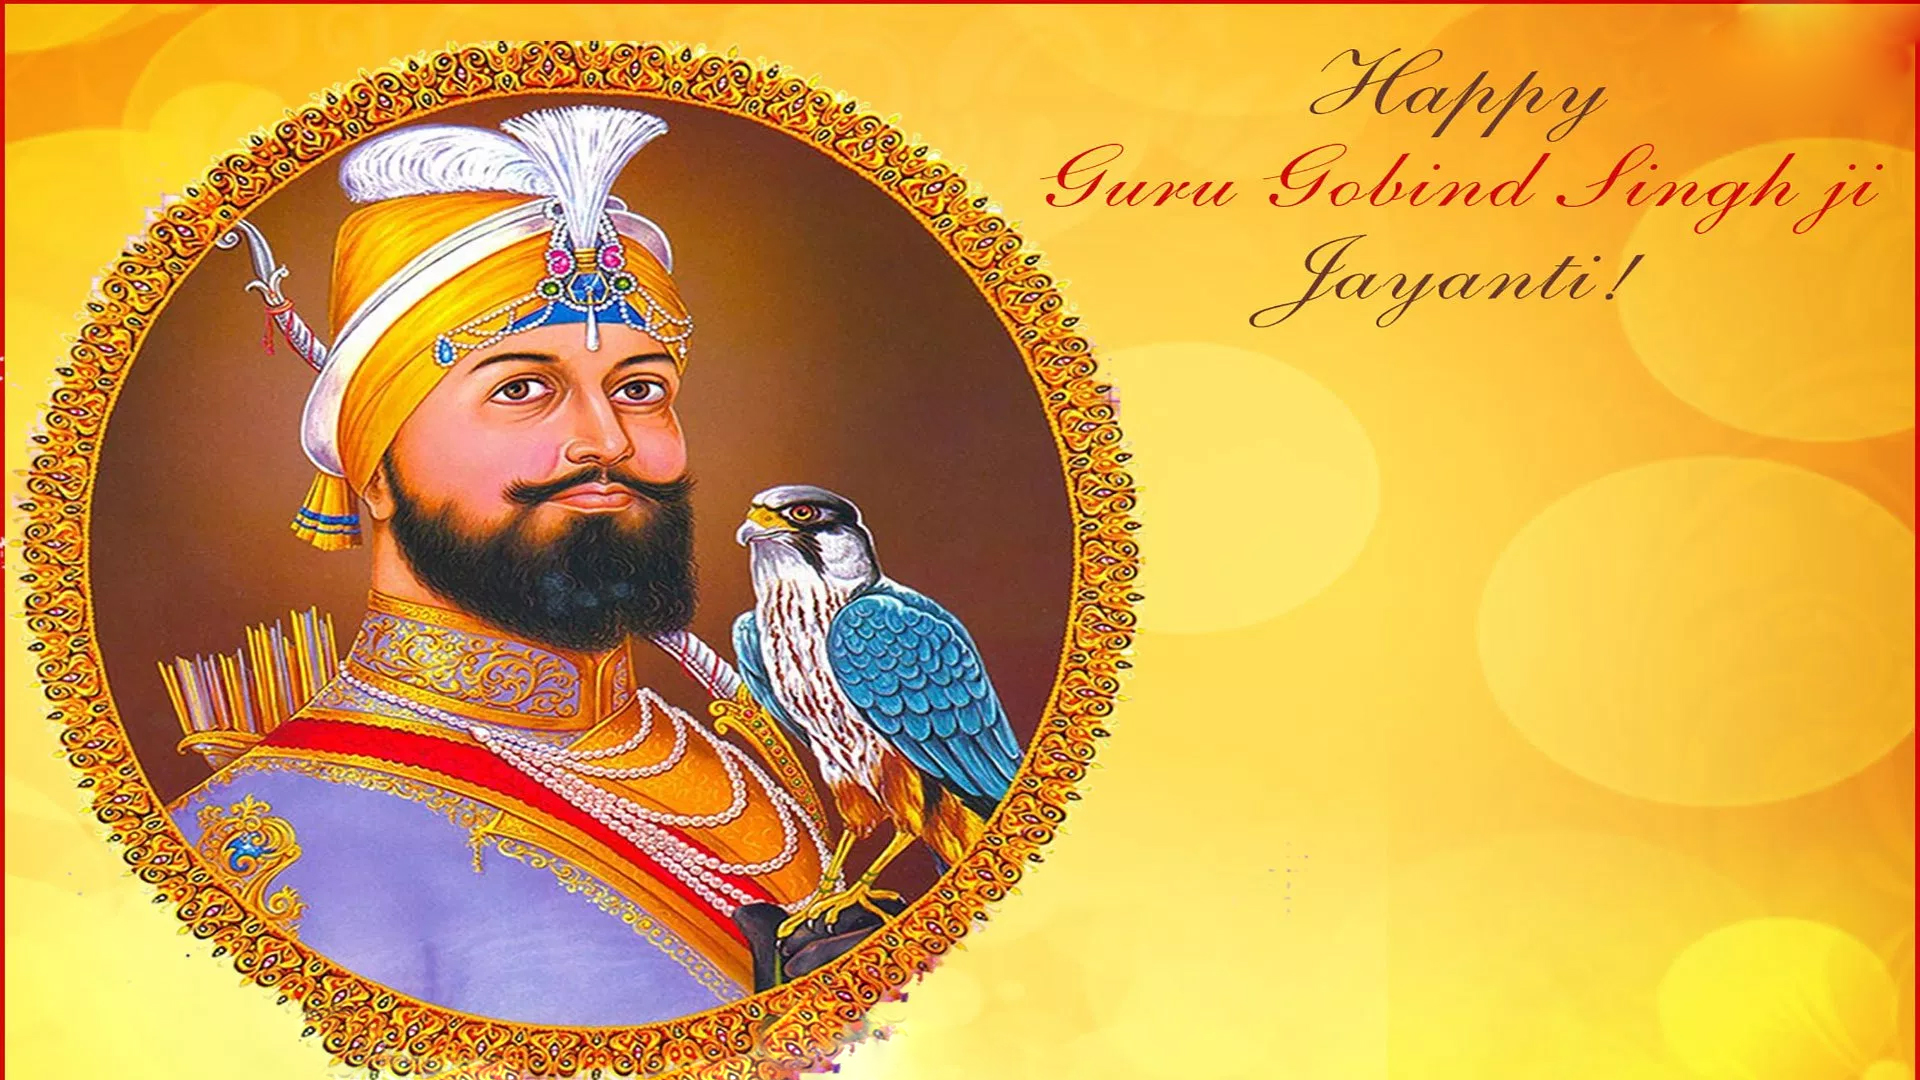 Happy Guru Gobind Singh Jayanti Images Wallpaper Photos Download Hd